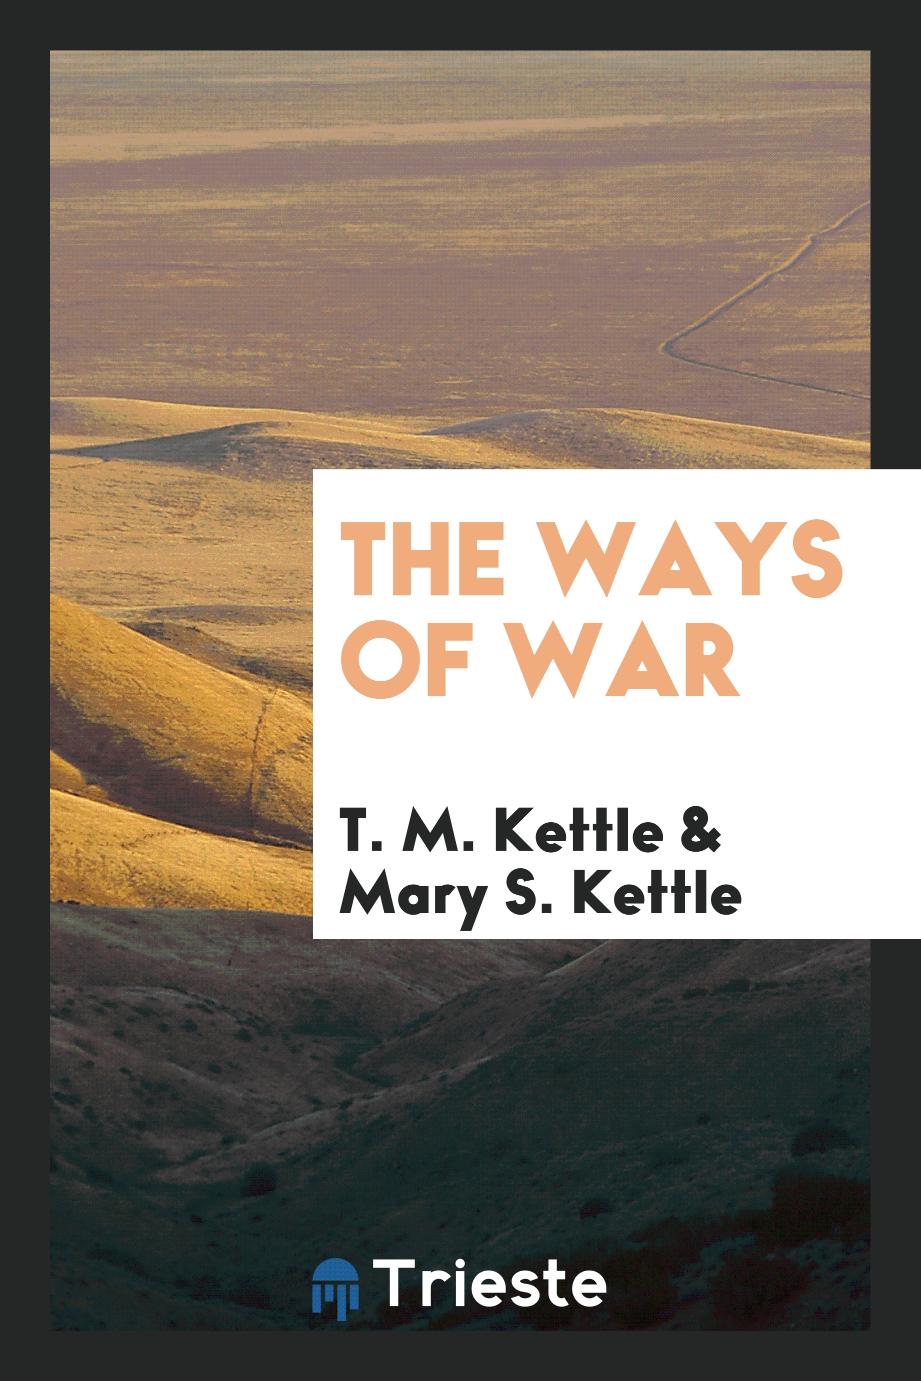 The ways of war